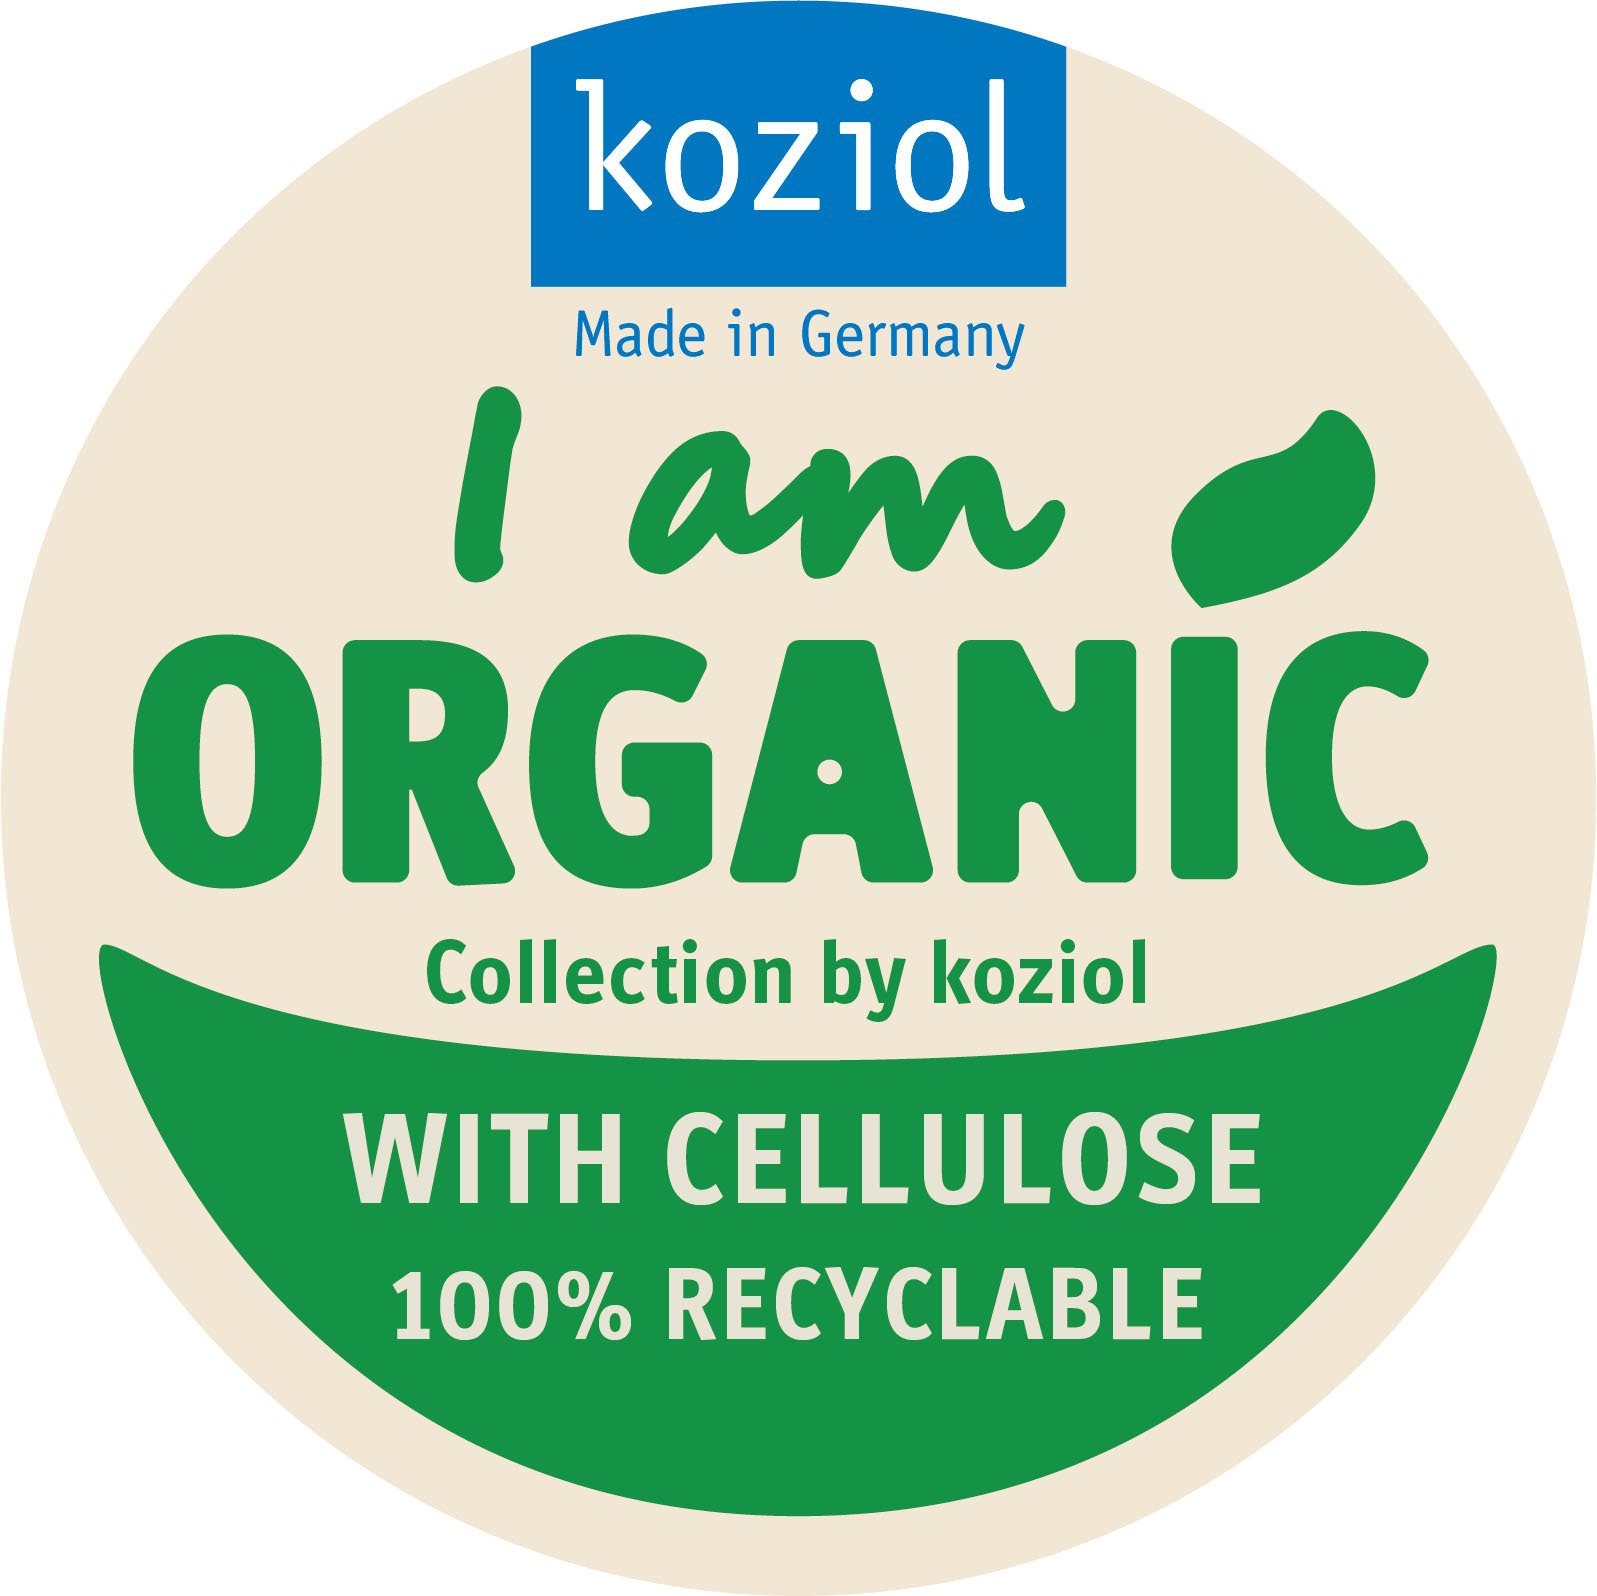 XL, melaminfrei, Kunststoff, grey KOZIOL ml, Made AROMA Germany 700 organic GO TO Thermobecher in spülmaschinengeeignet,